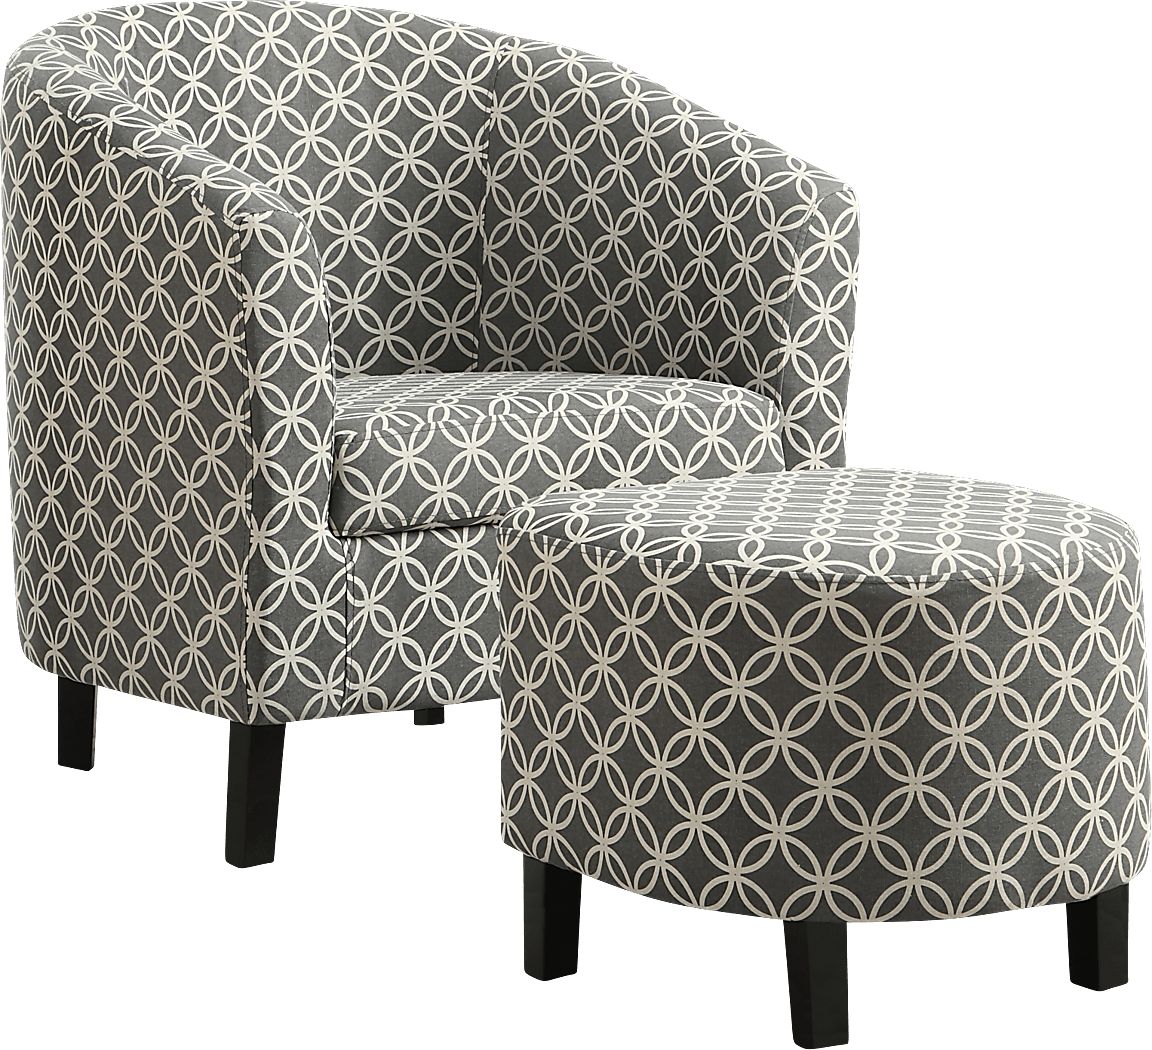 Ferncroft Gray Accent Chair Ottoman 18080604 Image Item?cache Id=96f5b369f12a6041beb328a5f7ad2af0